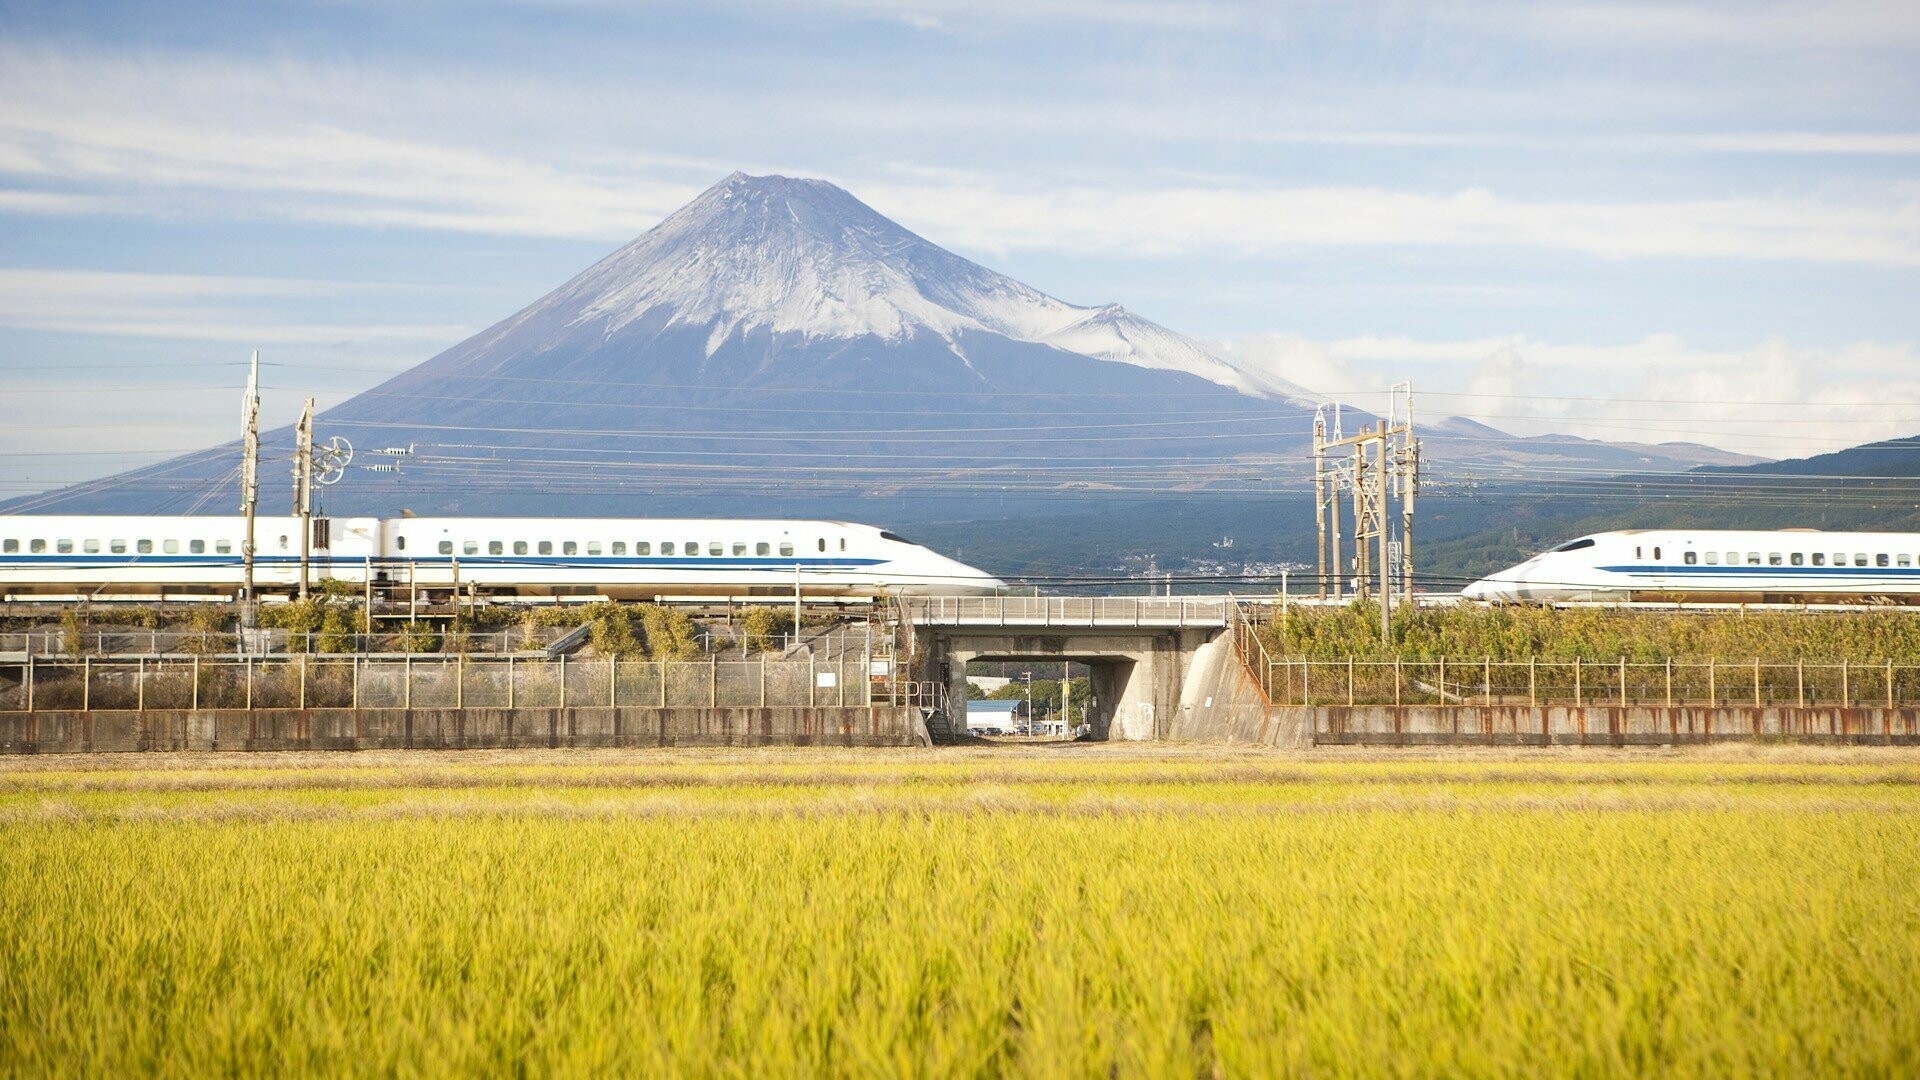 Bullet Train, Mount Fuji, Shinkansen trains, Blazblue wallpapers, 1920x1080 Full HD Desktop